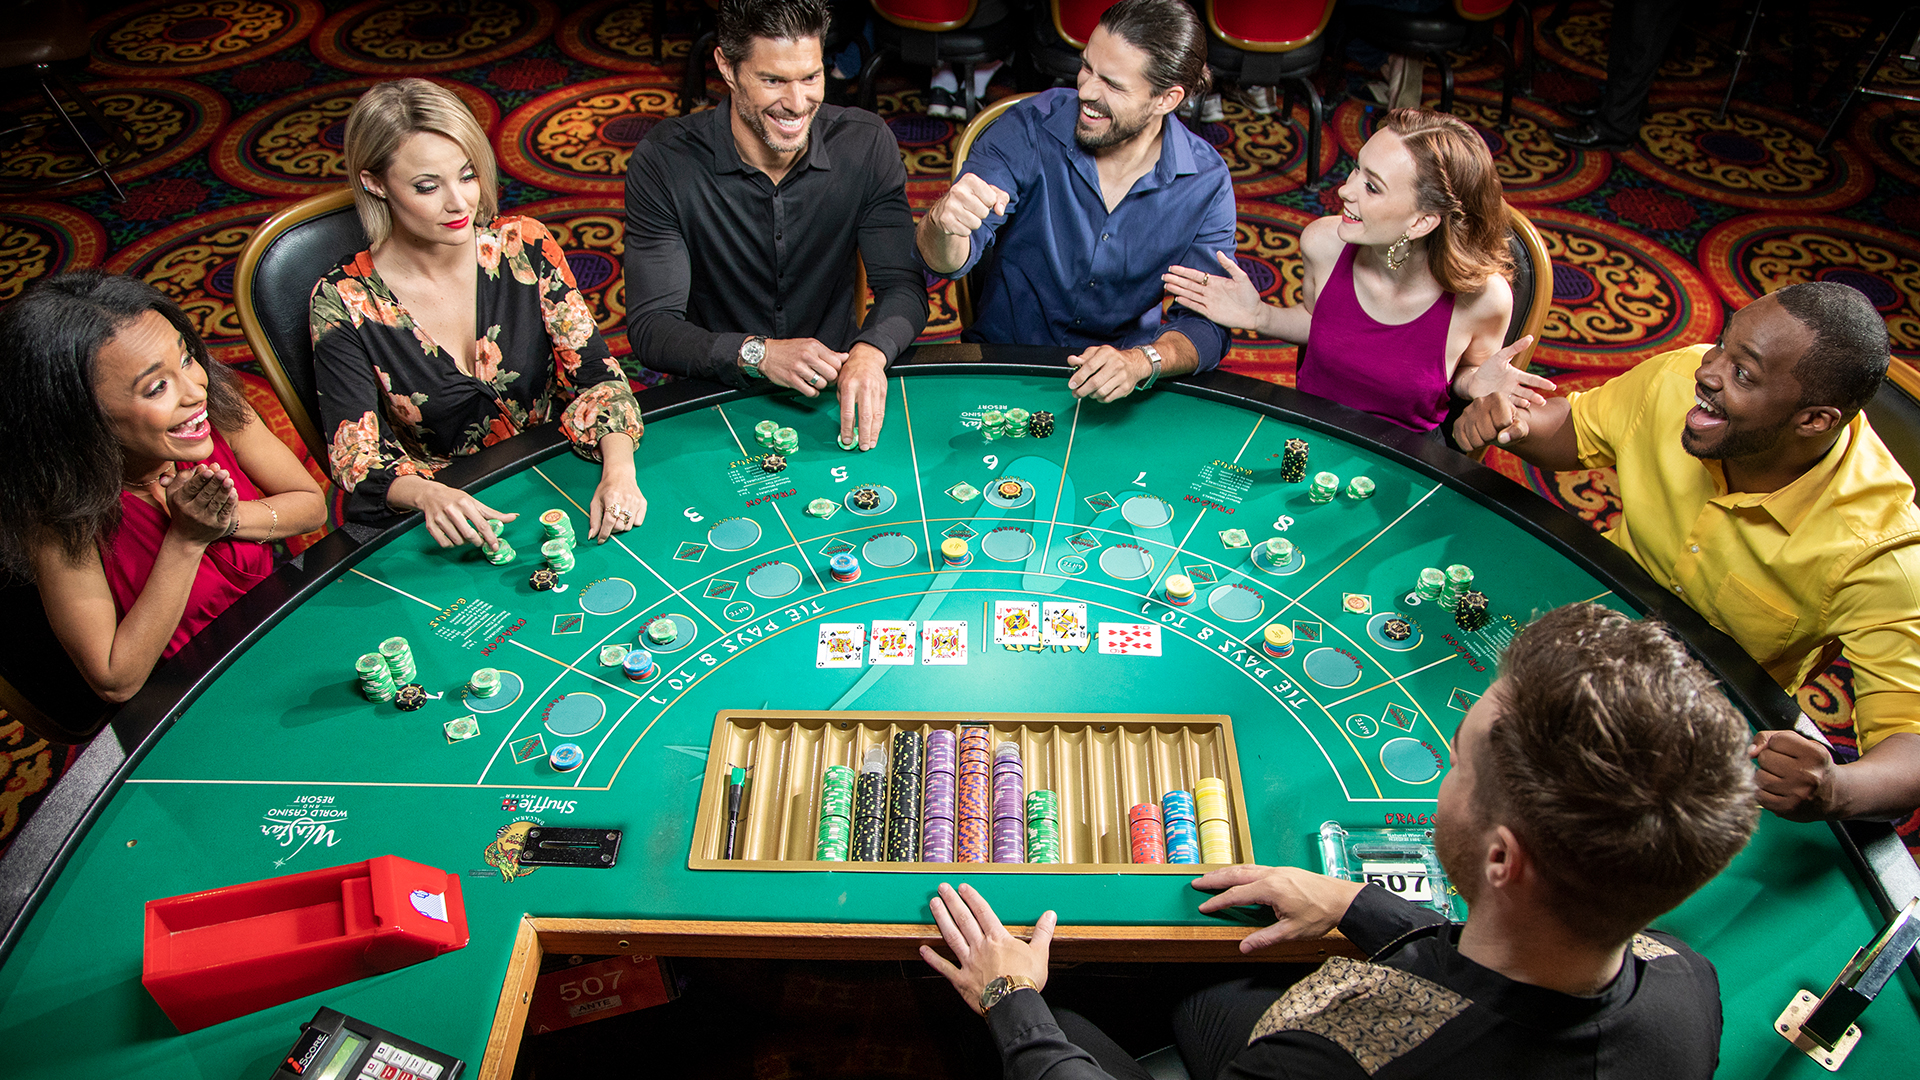 Cashing Around at Online casinos